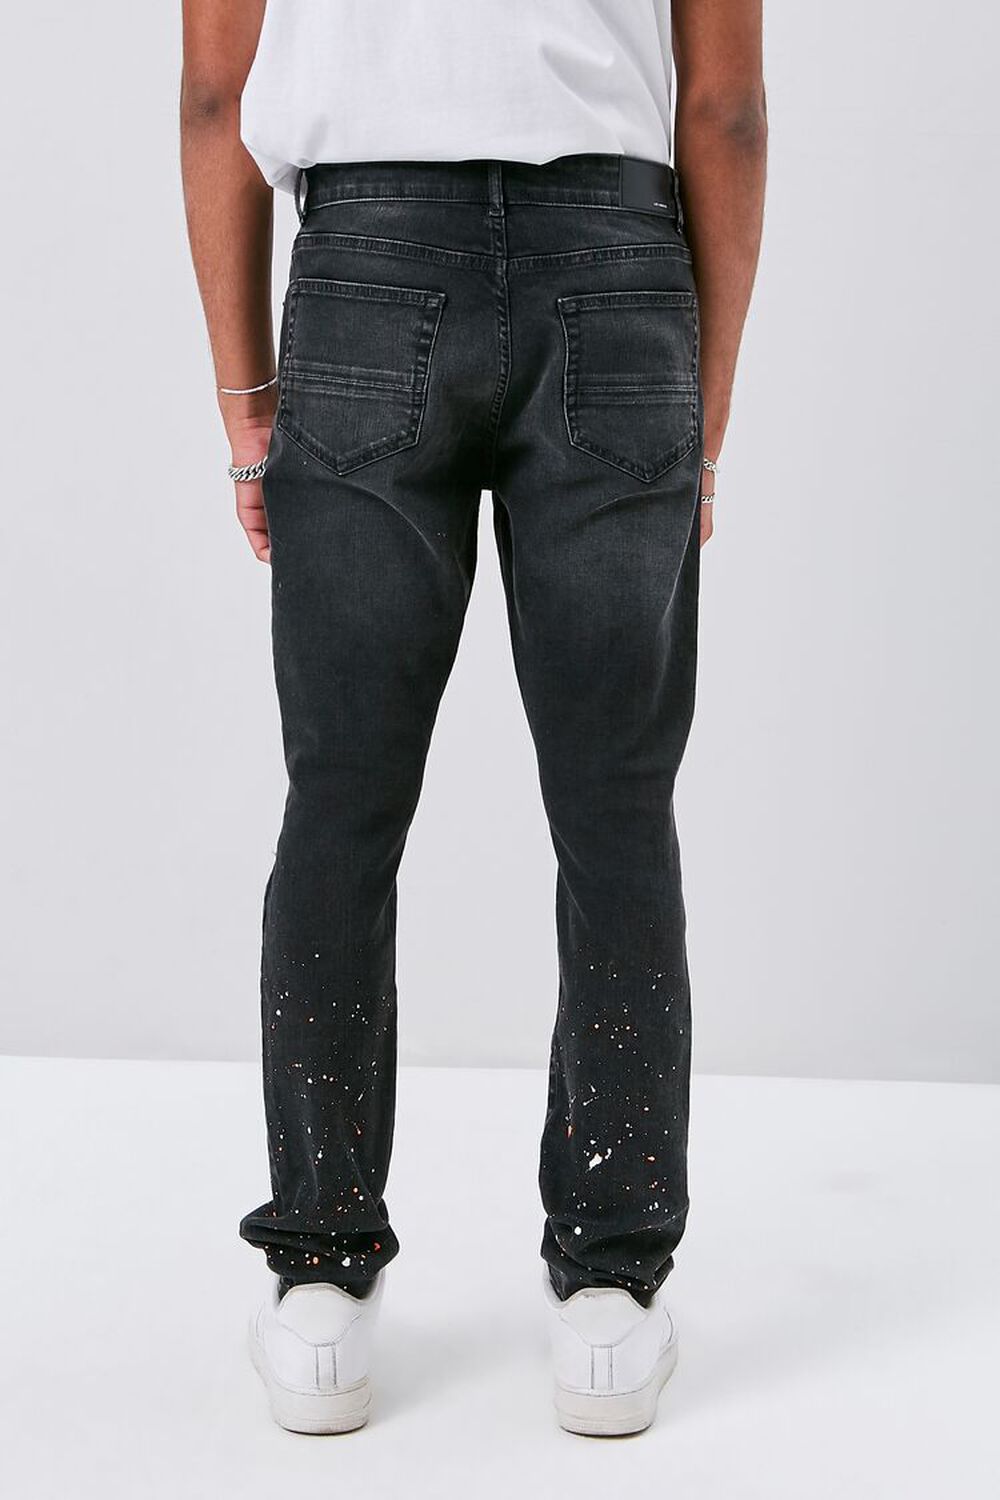 Paint Splatter Distressed Jeans